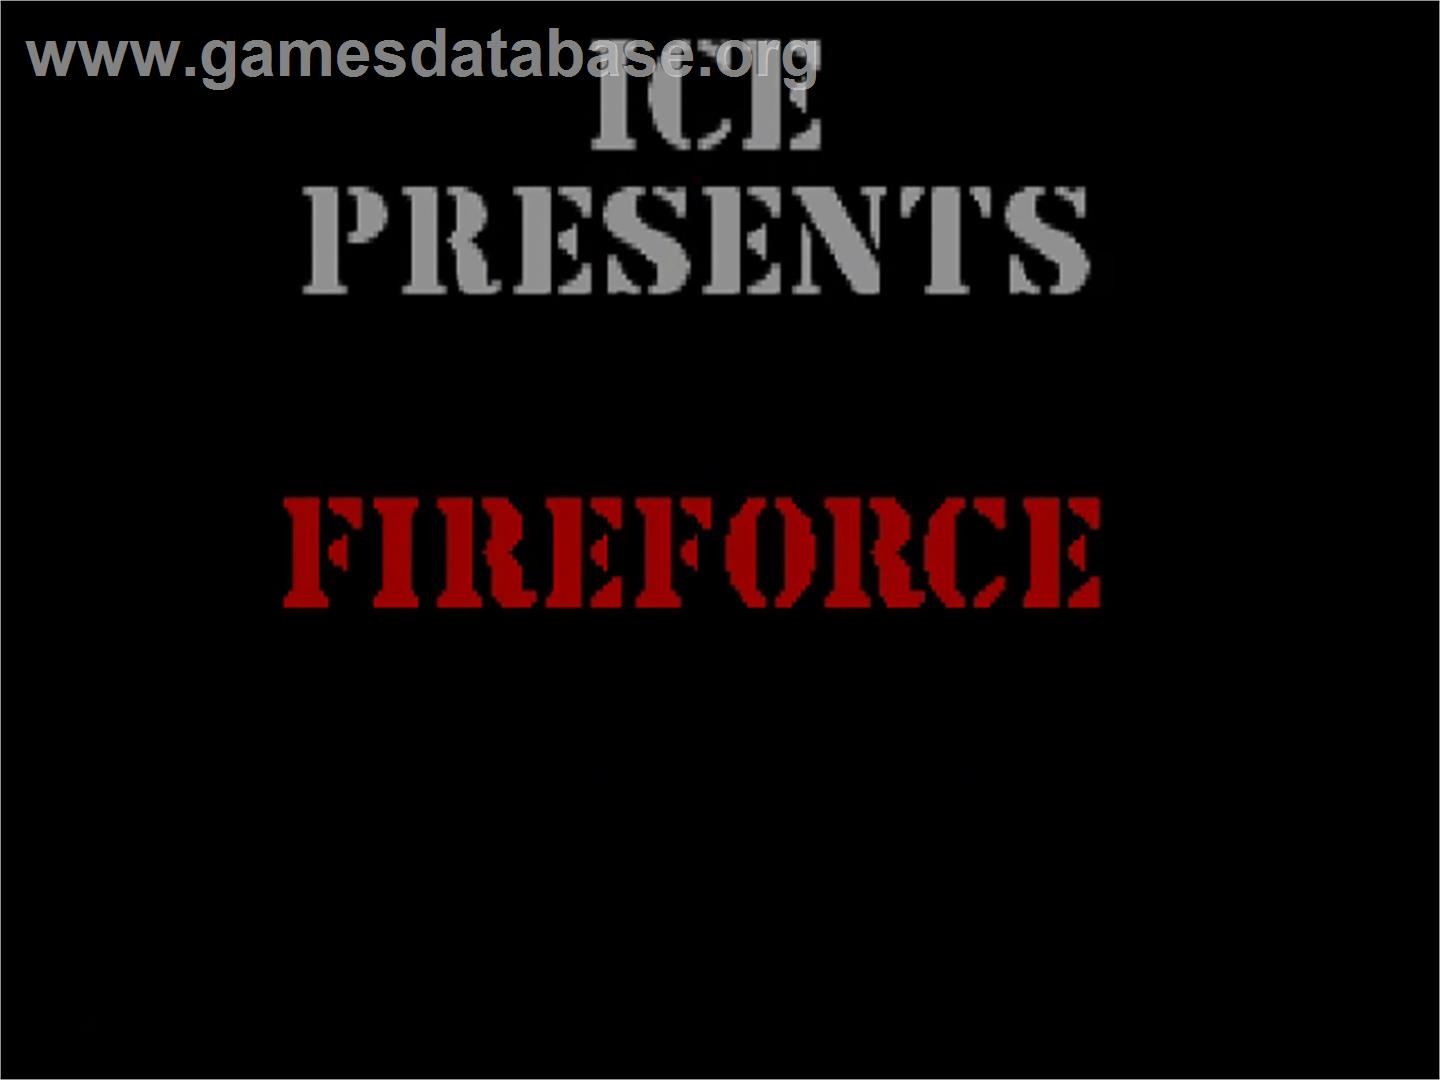 Fire Force - Commodore Amiga CD32 - Artwork - Title Screen